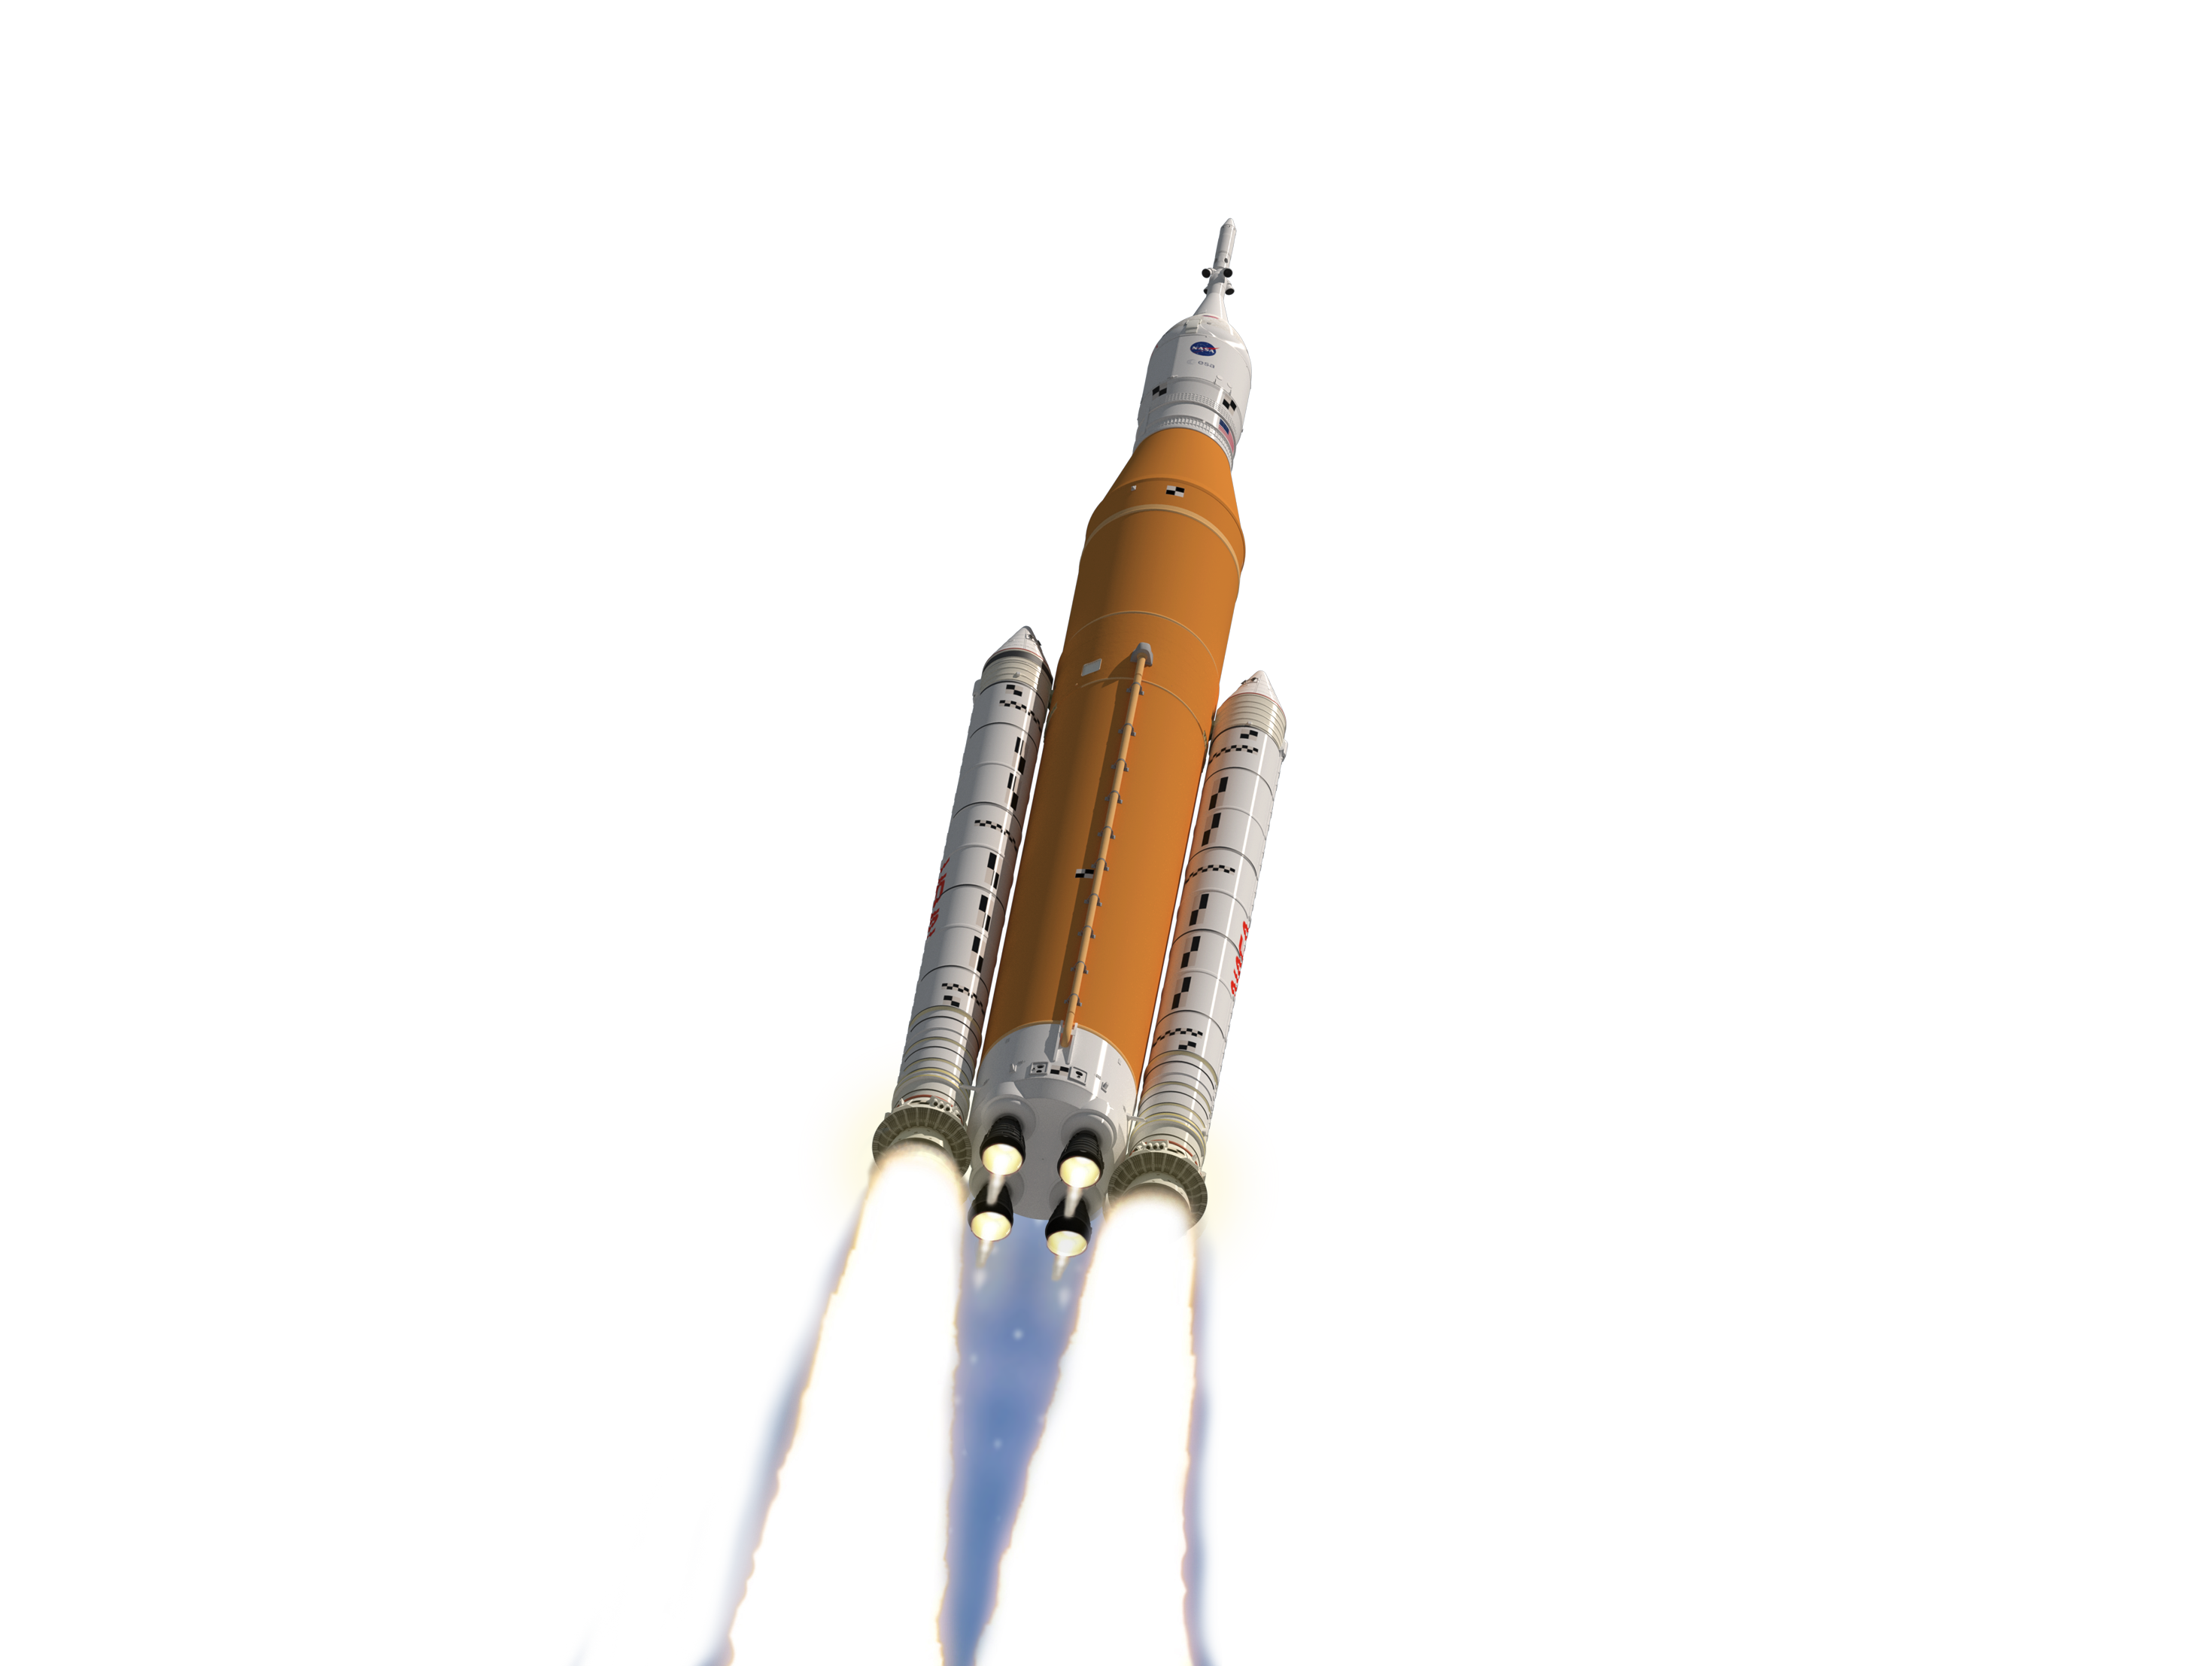 9” Tall SLS ORION SPACE TRAVEL ROCKET DESK MODEL 3-d PRINTED 